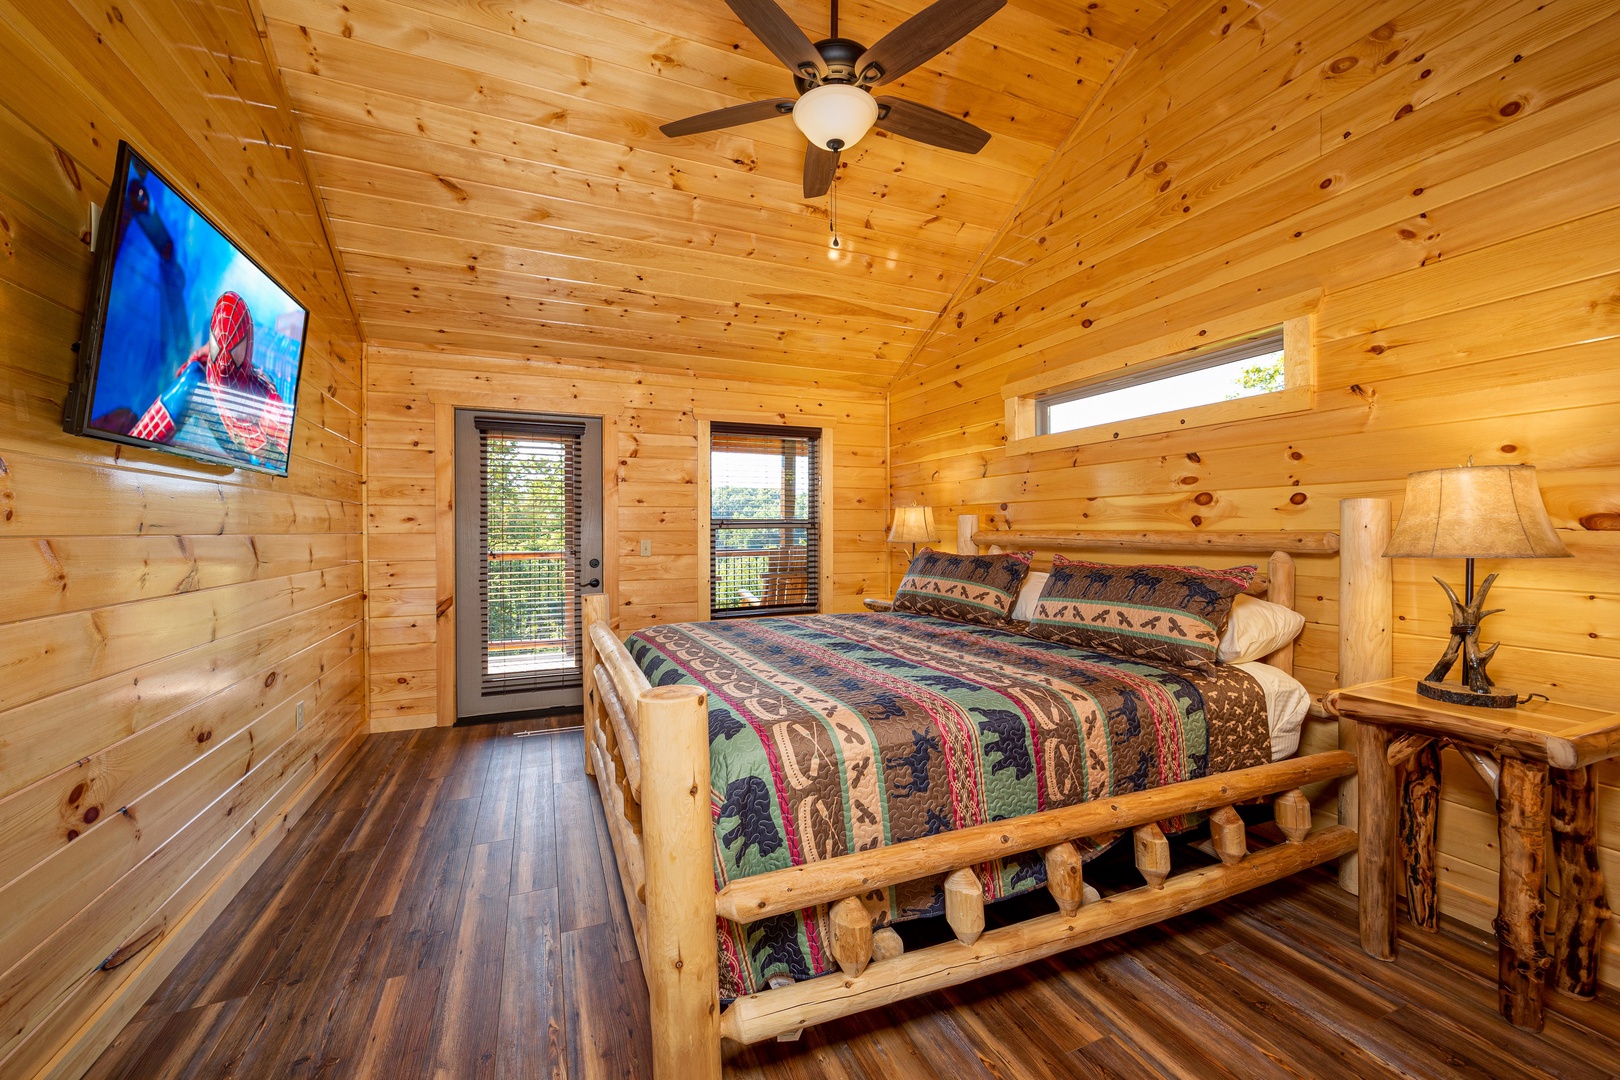 Bedroom with Deck Entry at Make A Splash, a 2 bedroom cabin rental located in gatlinburg